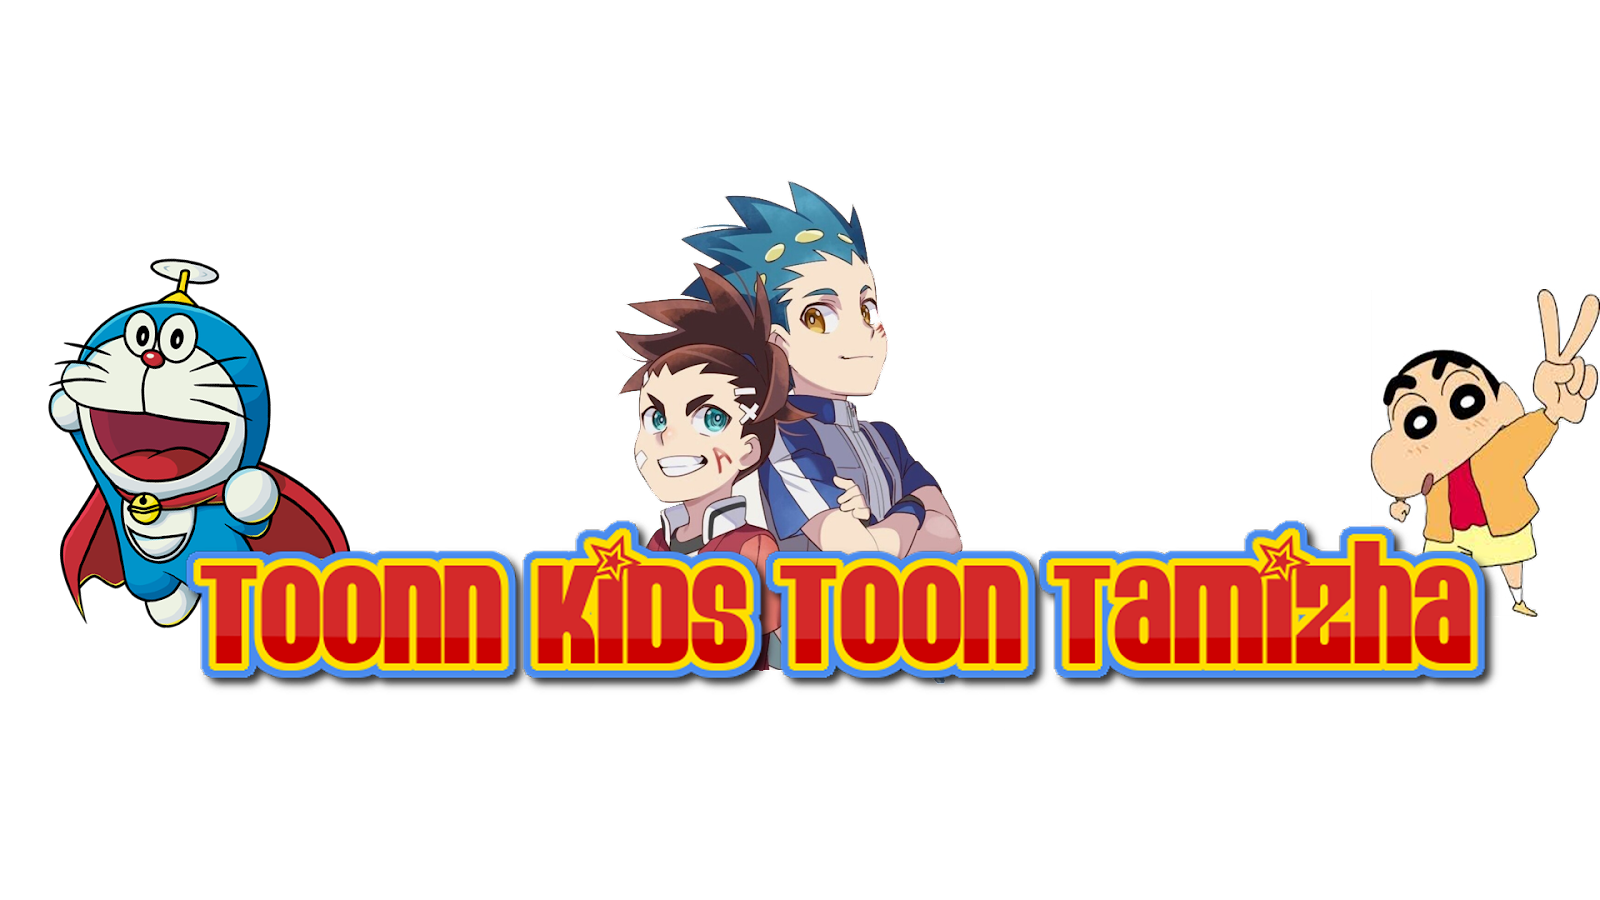 Toon Kids Toon Tamizha